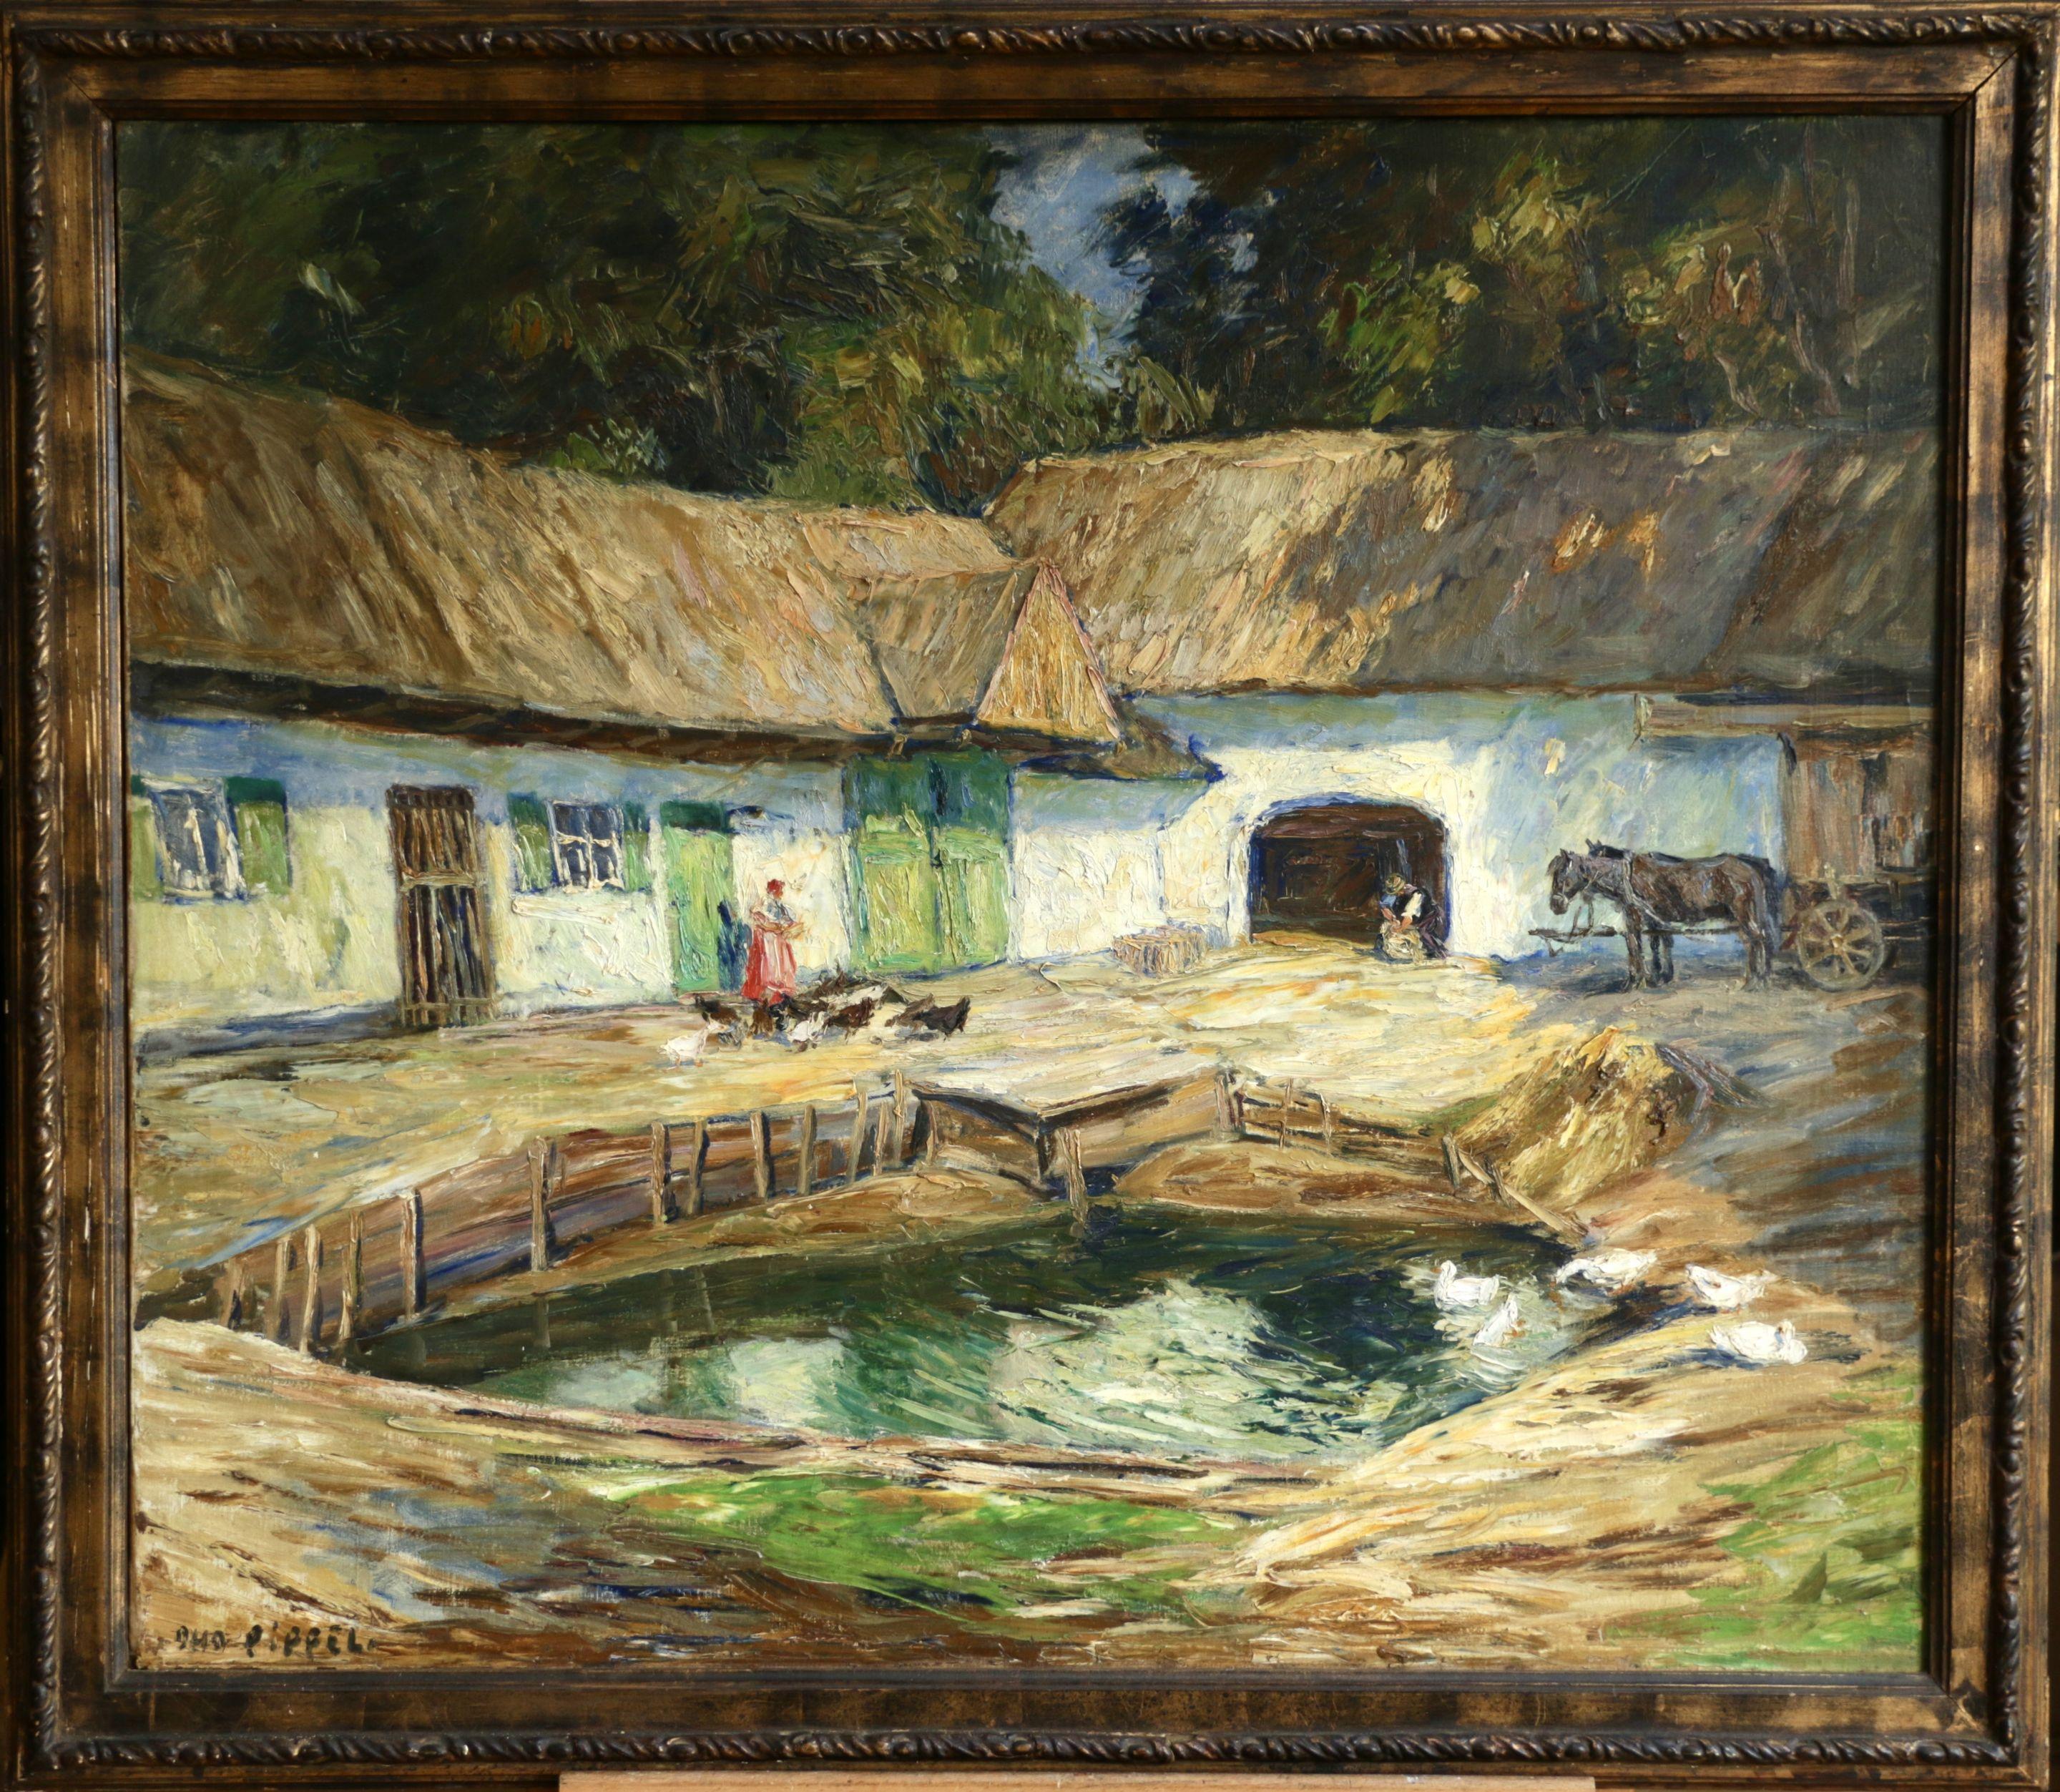 Alte Bauernhof - 20th Century Oil, Figure & Animals in Farmyard by O E Pippel (Post-Impressionismus), Painting, von Otto Eduard Pippel